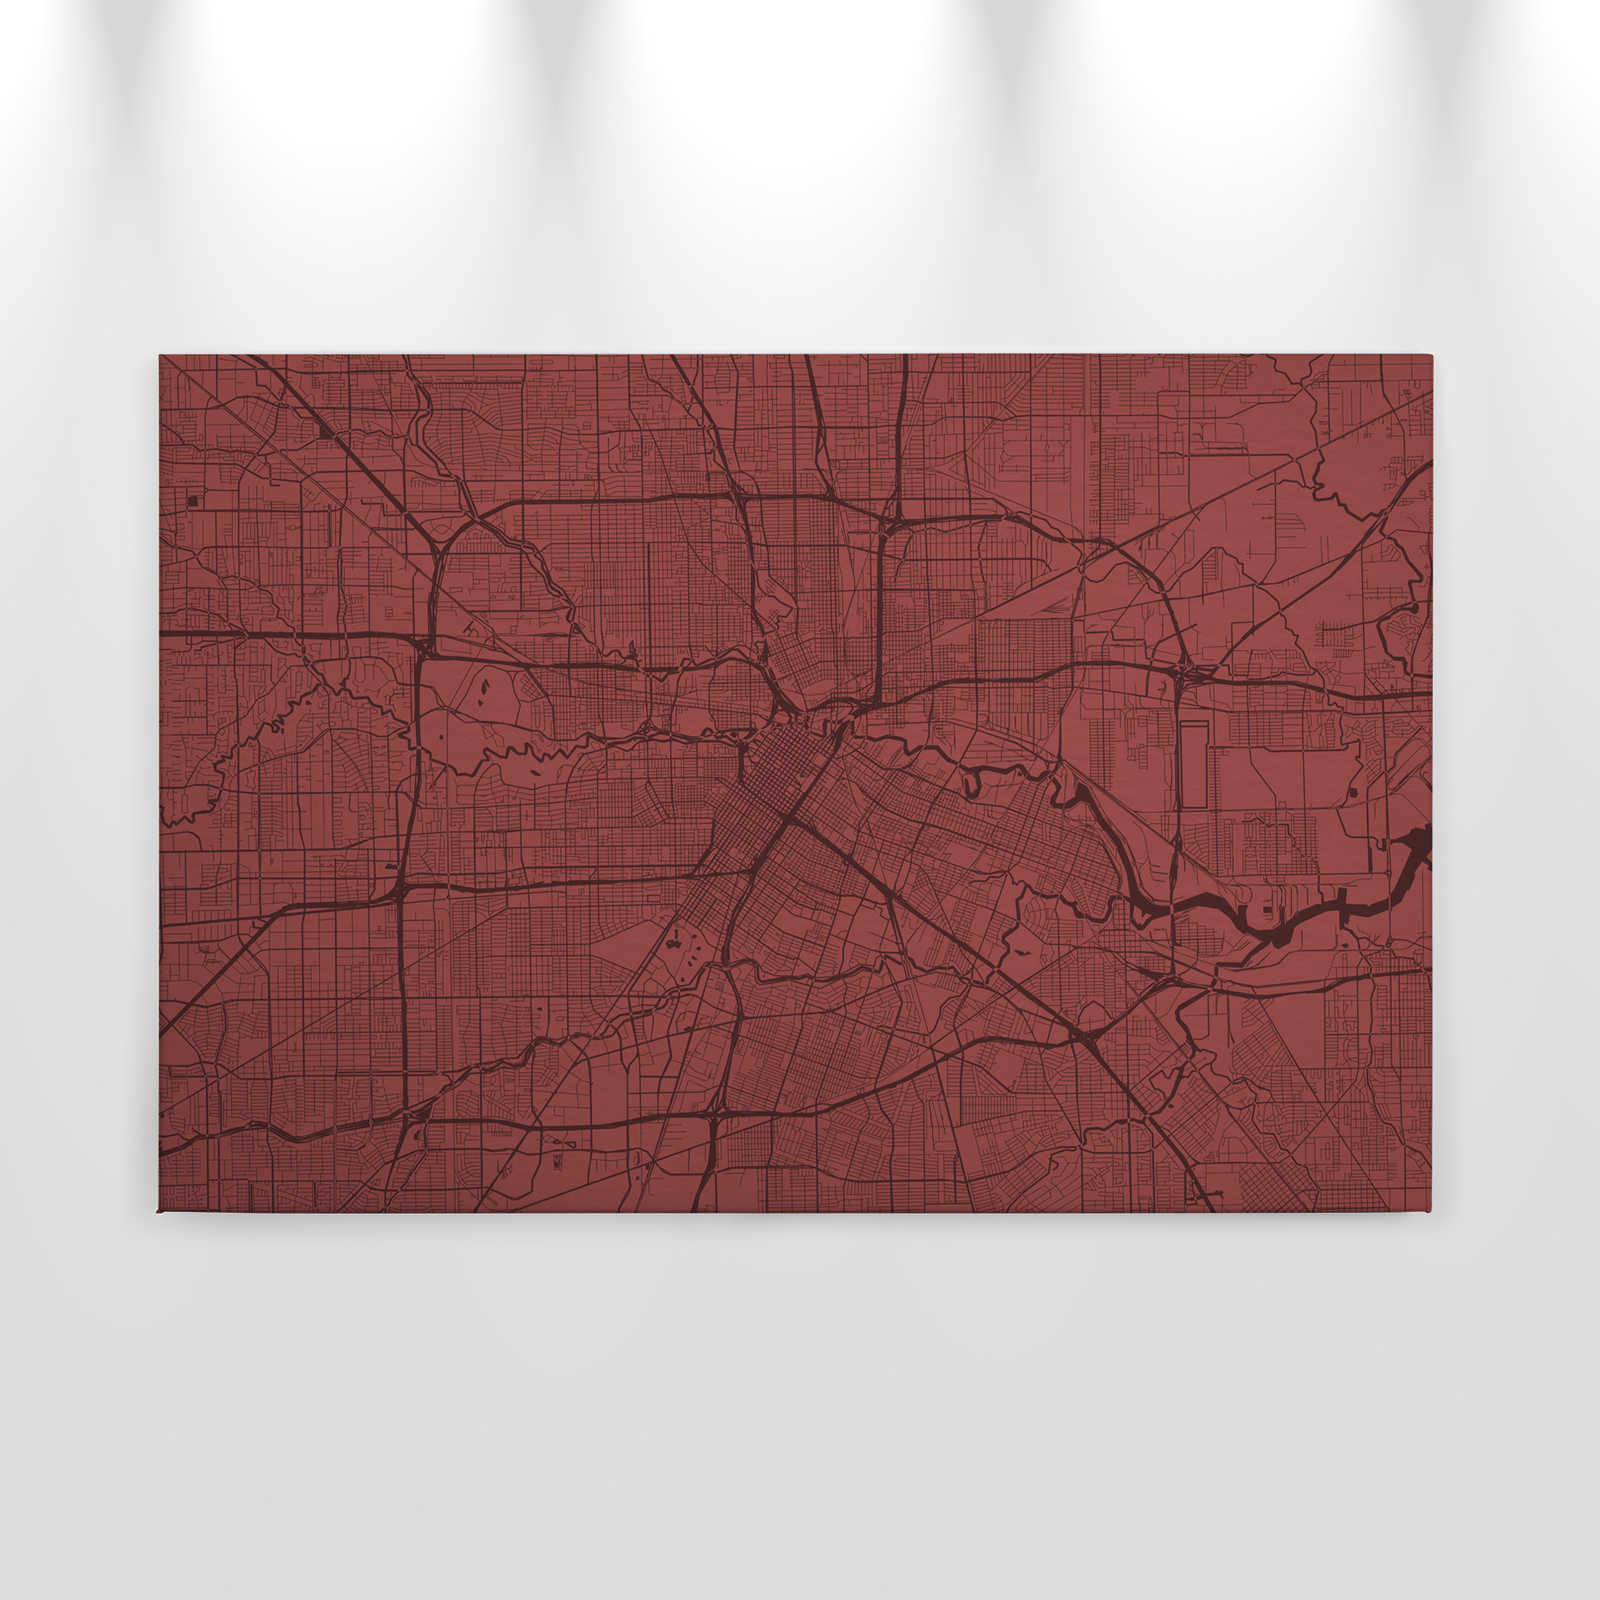             Canvas schilderij Stadsplattegrond met stratenplan | rood - 0,90 m x 0,60 m
        